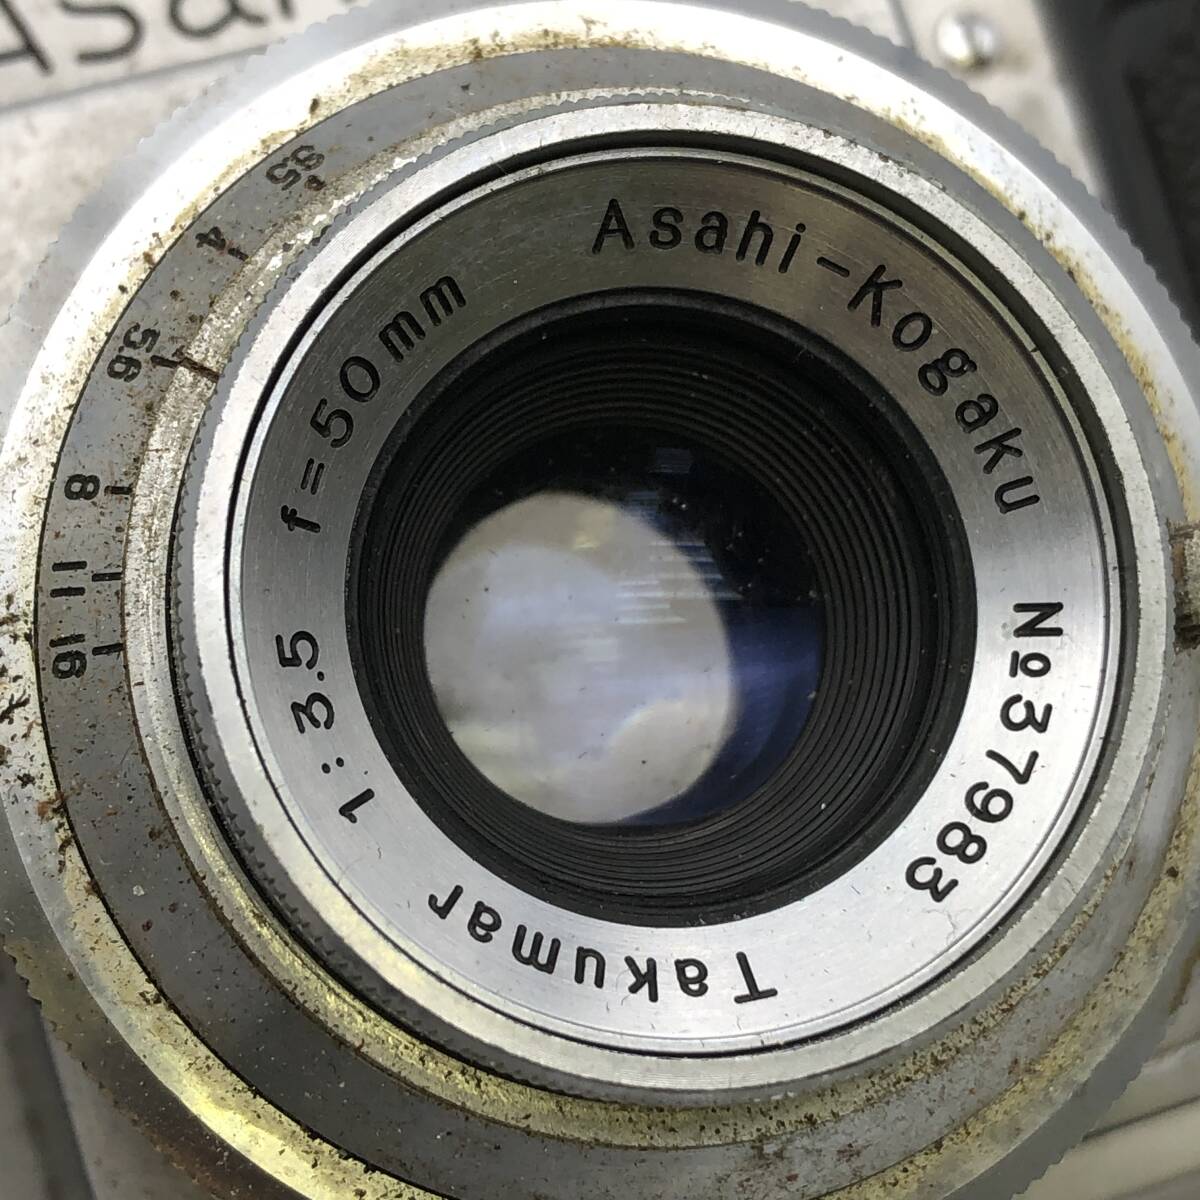 0503-1M☆ Asahiflex Takumar 50mm F3.5 レンズセット 動作未確認 現状品 No.34832 ヴィンテージ 雰囲気系 ジャンク_画像6